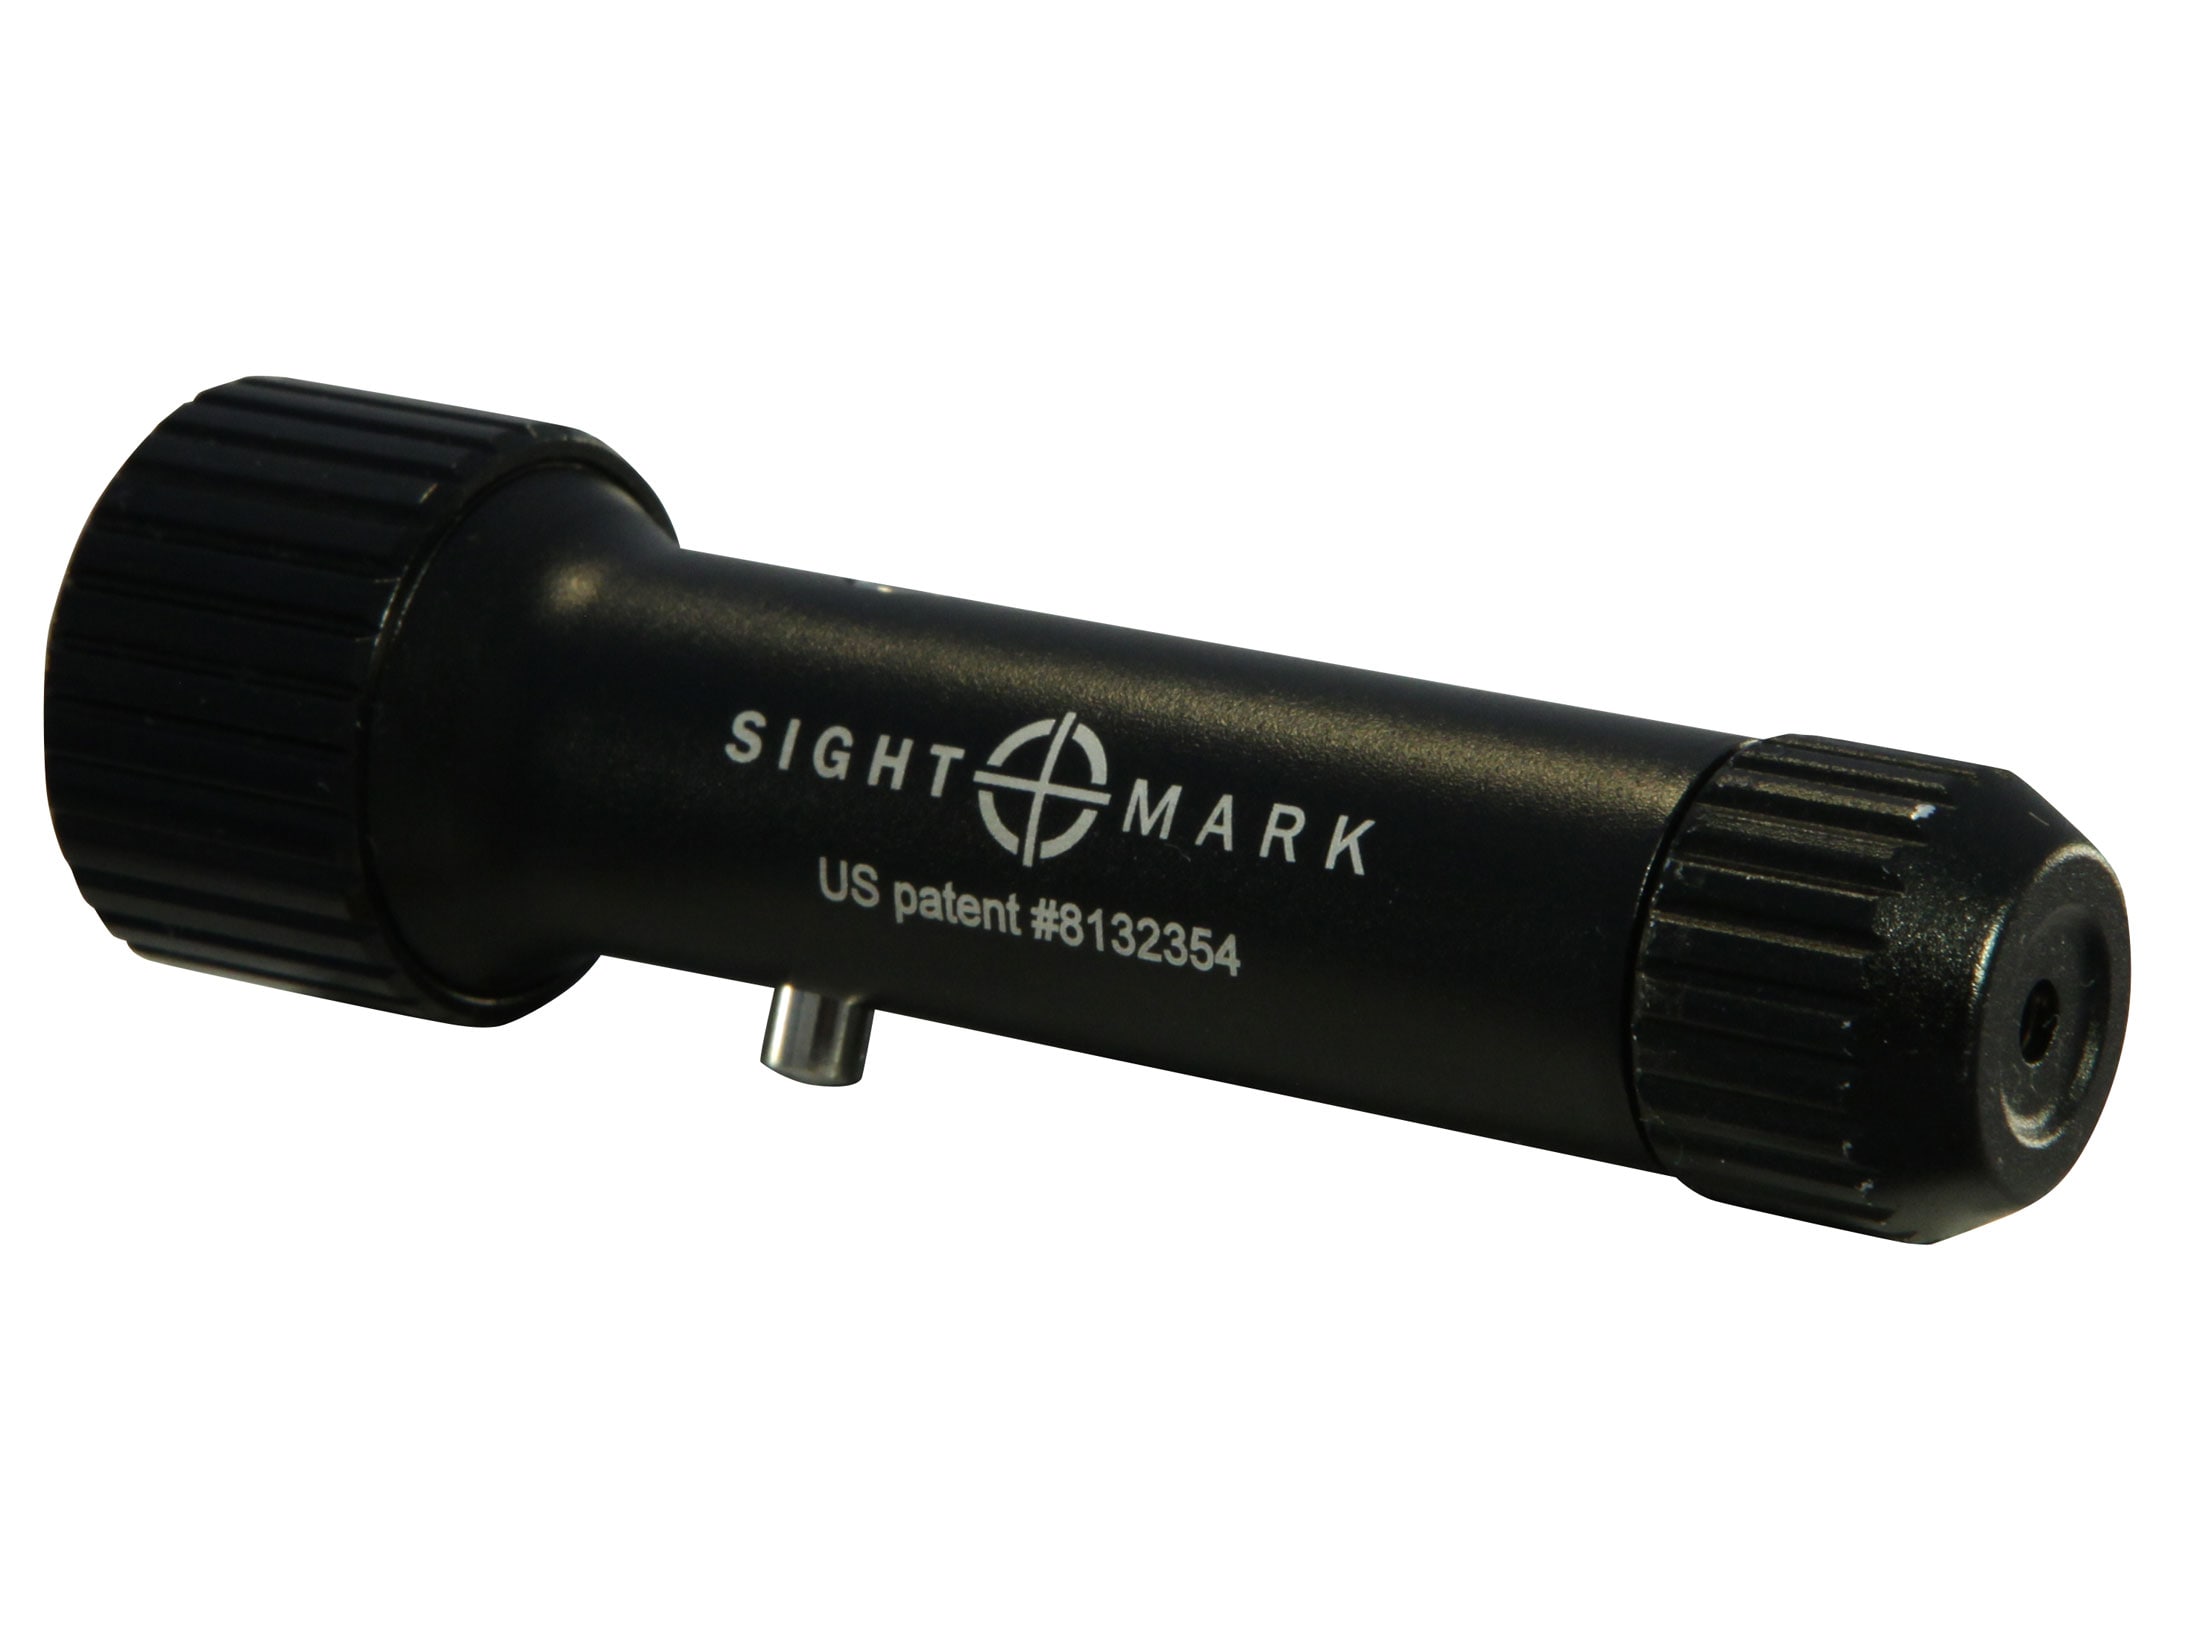 Red Laser Bore Sight Kit Boresighter for .22 to .50 Caliber Handgun Rifles L&6 